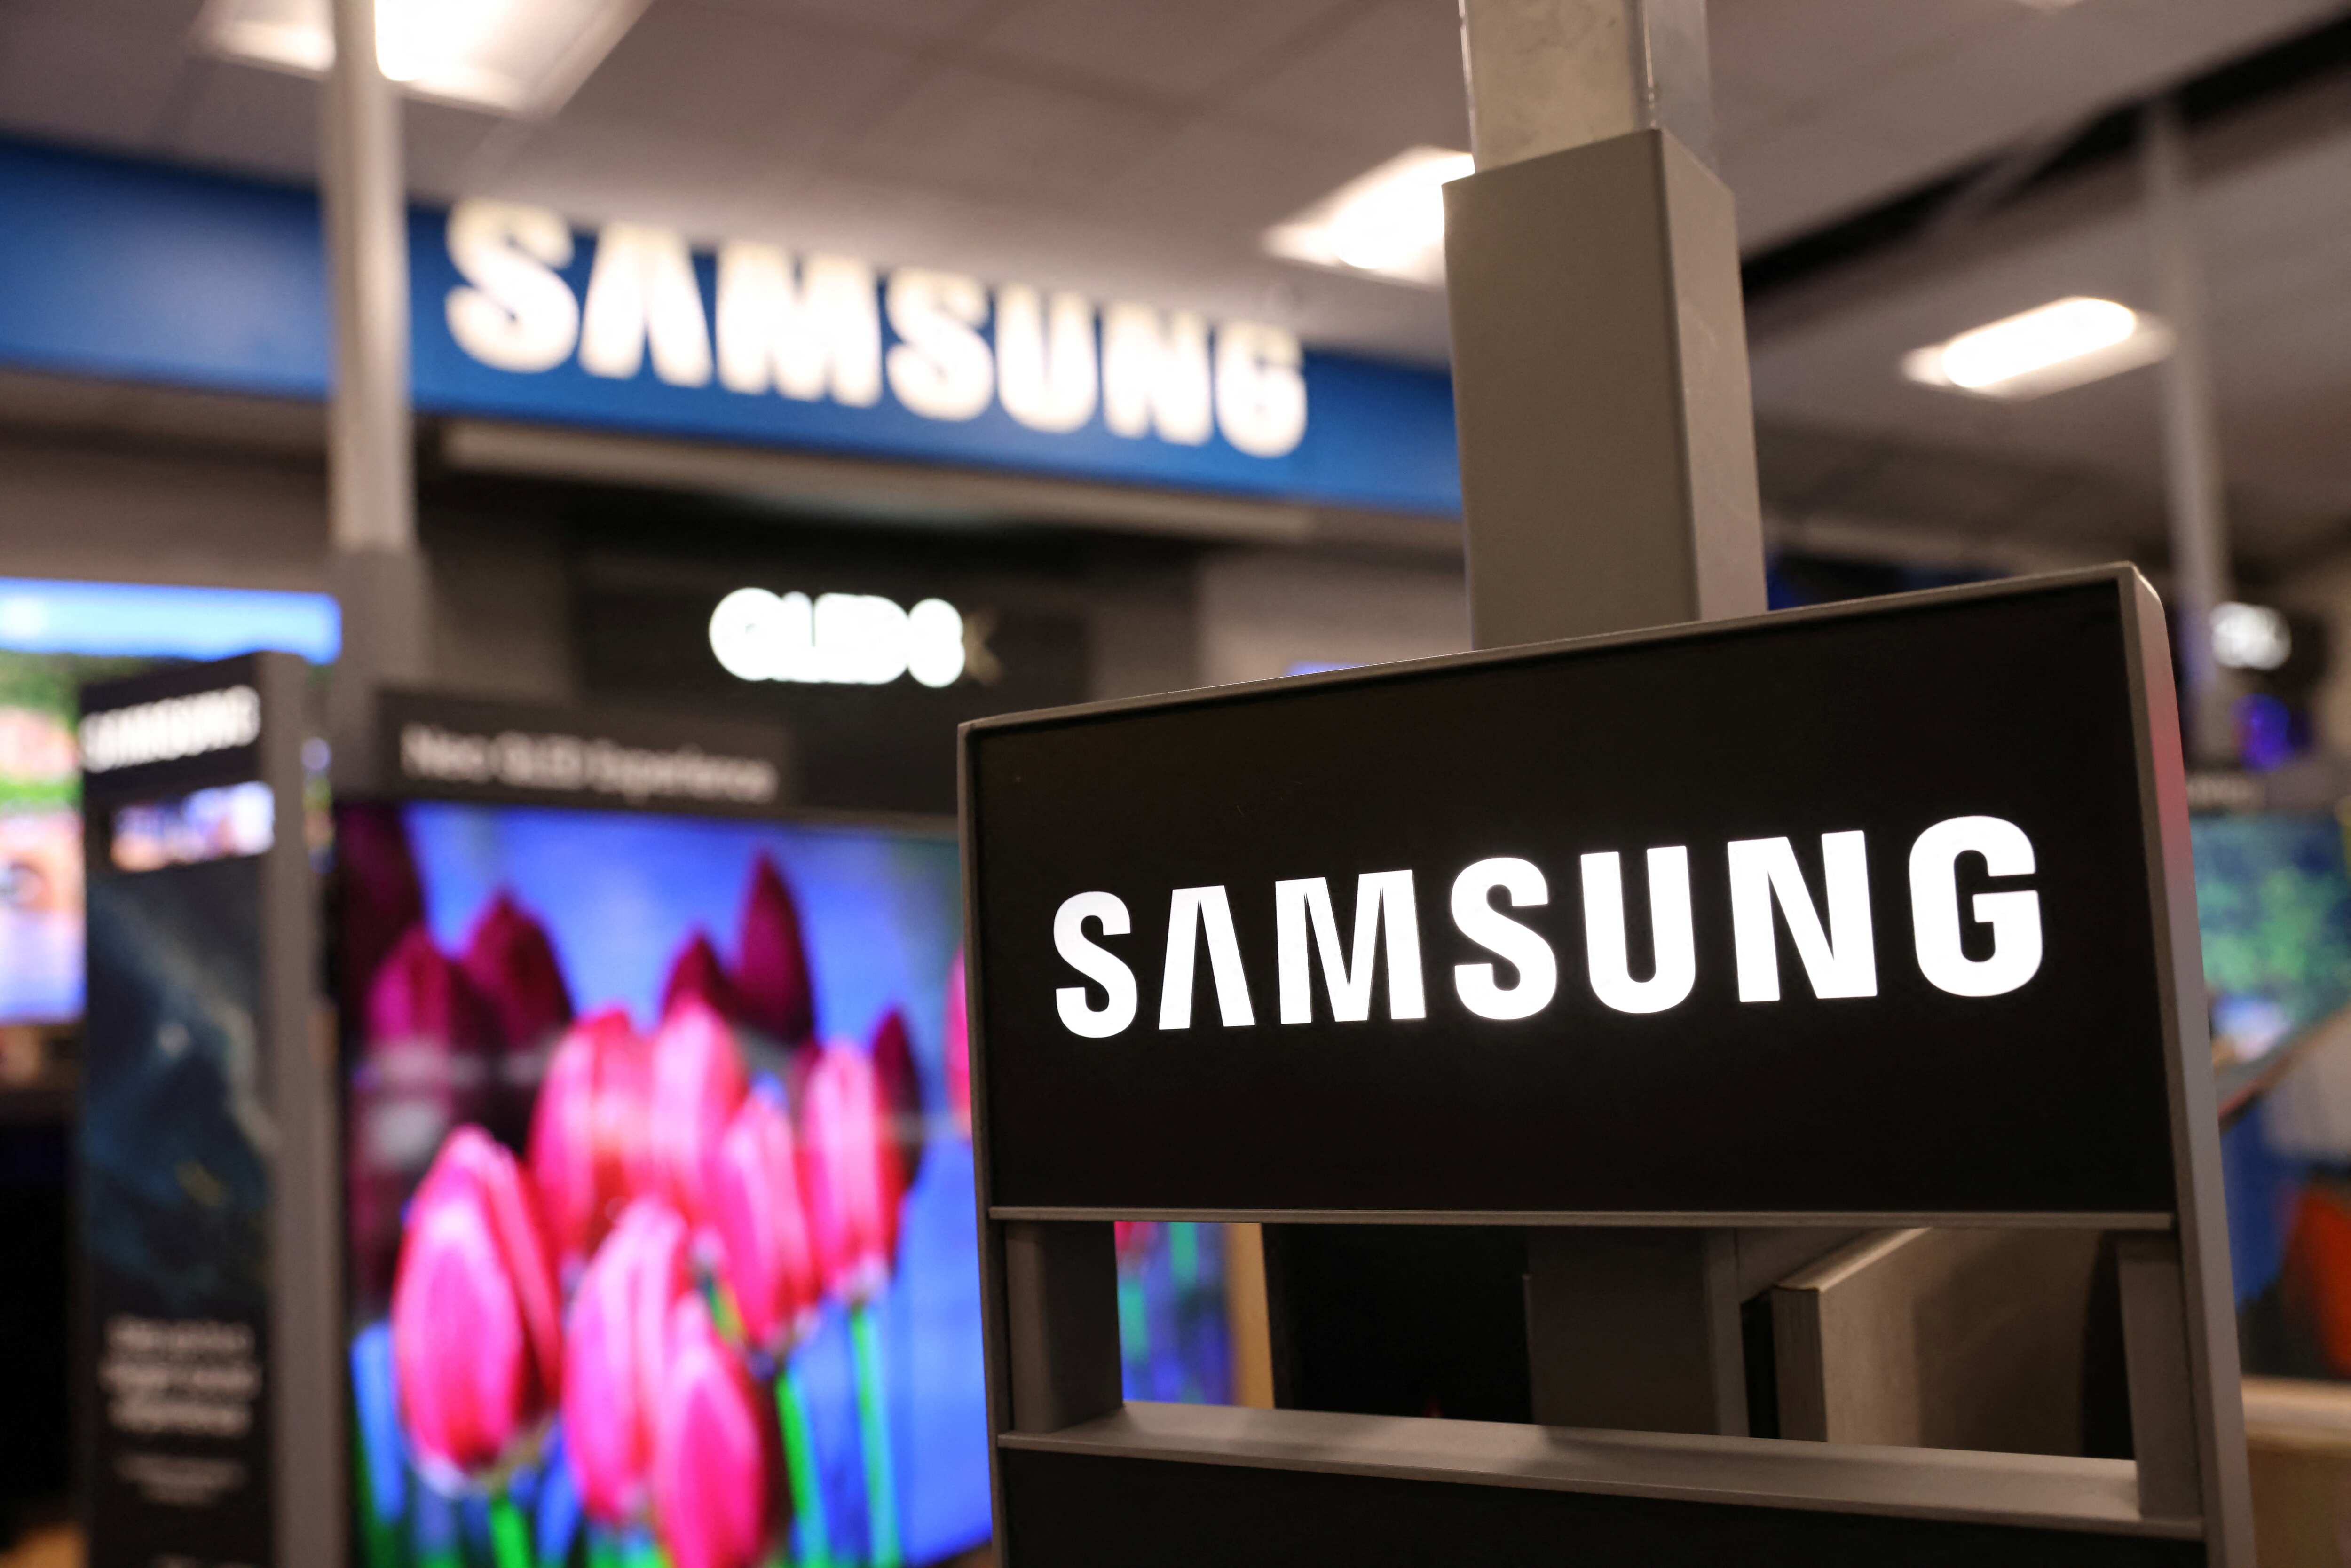 Samsung Launches 2023 Smart Monitor Lineup Globally – Samsung Newsroom U.K.